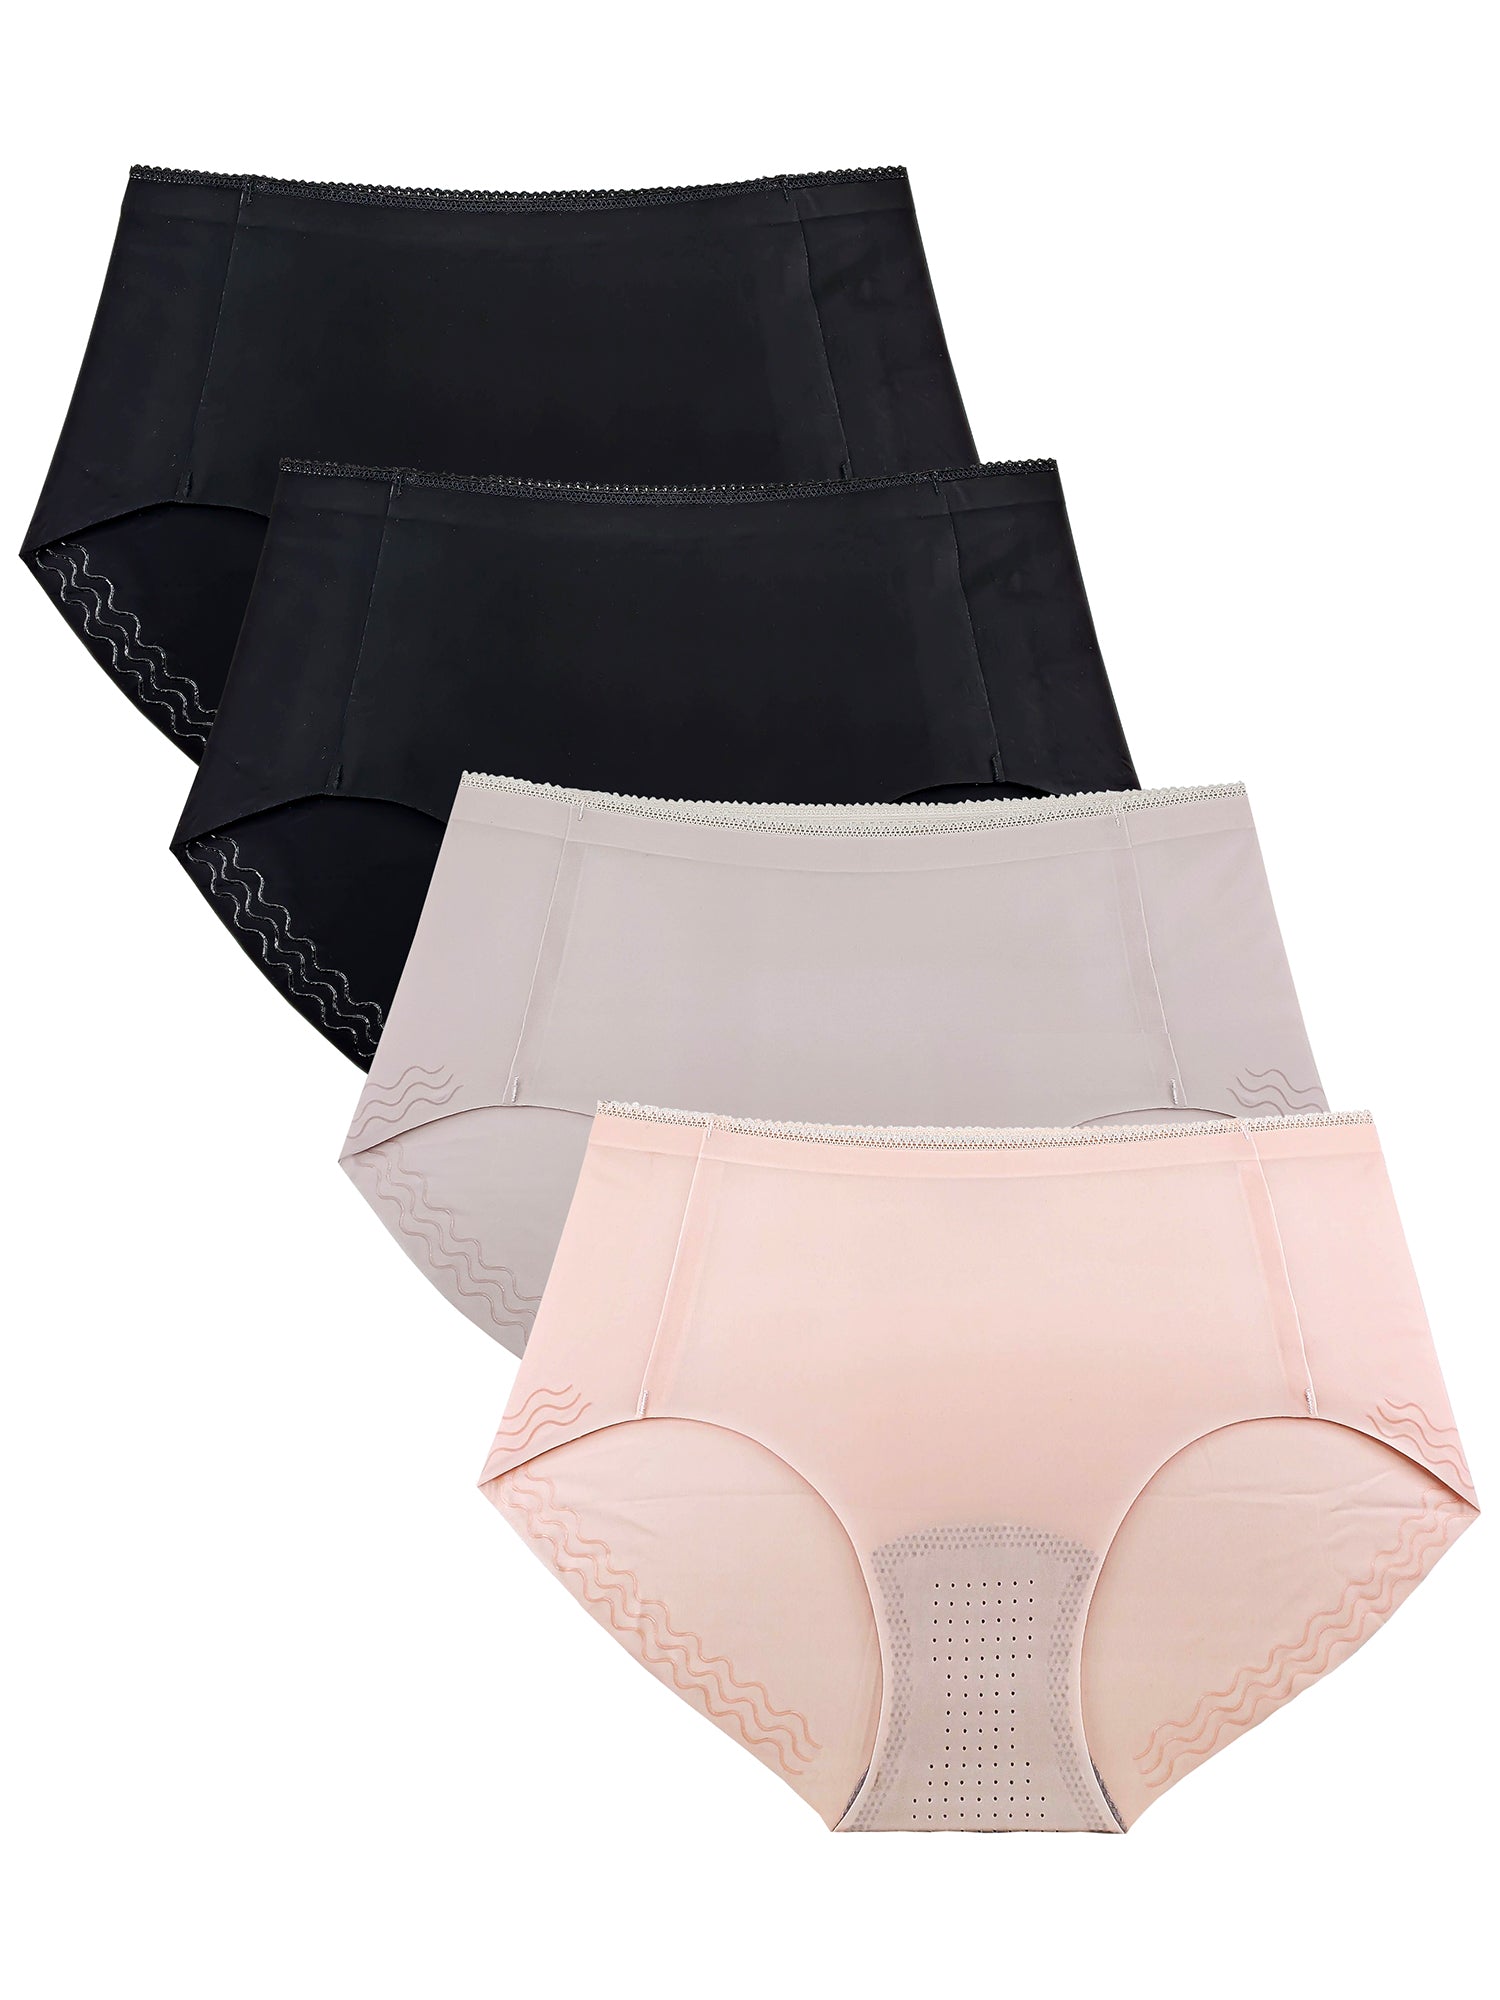 Generic 2019 Plus Size 2xl/3xl/4xl Stripes Underwear Women Cotton